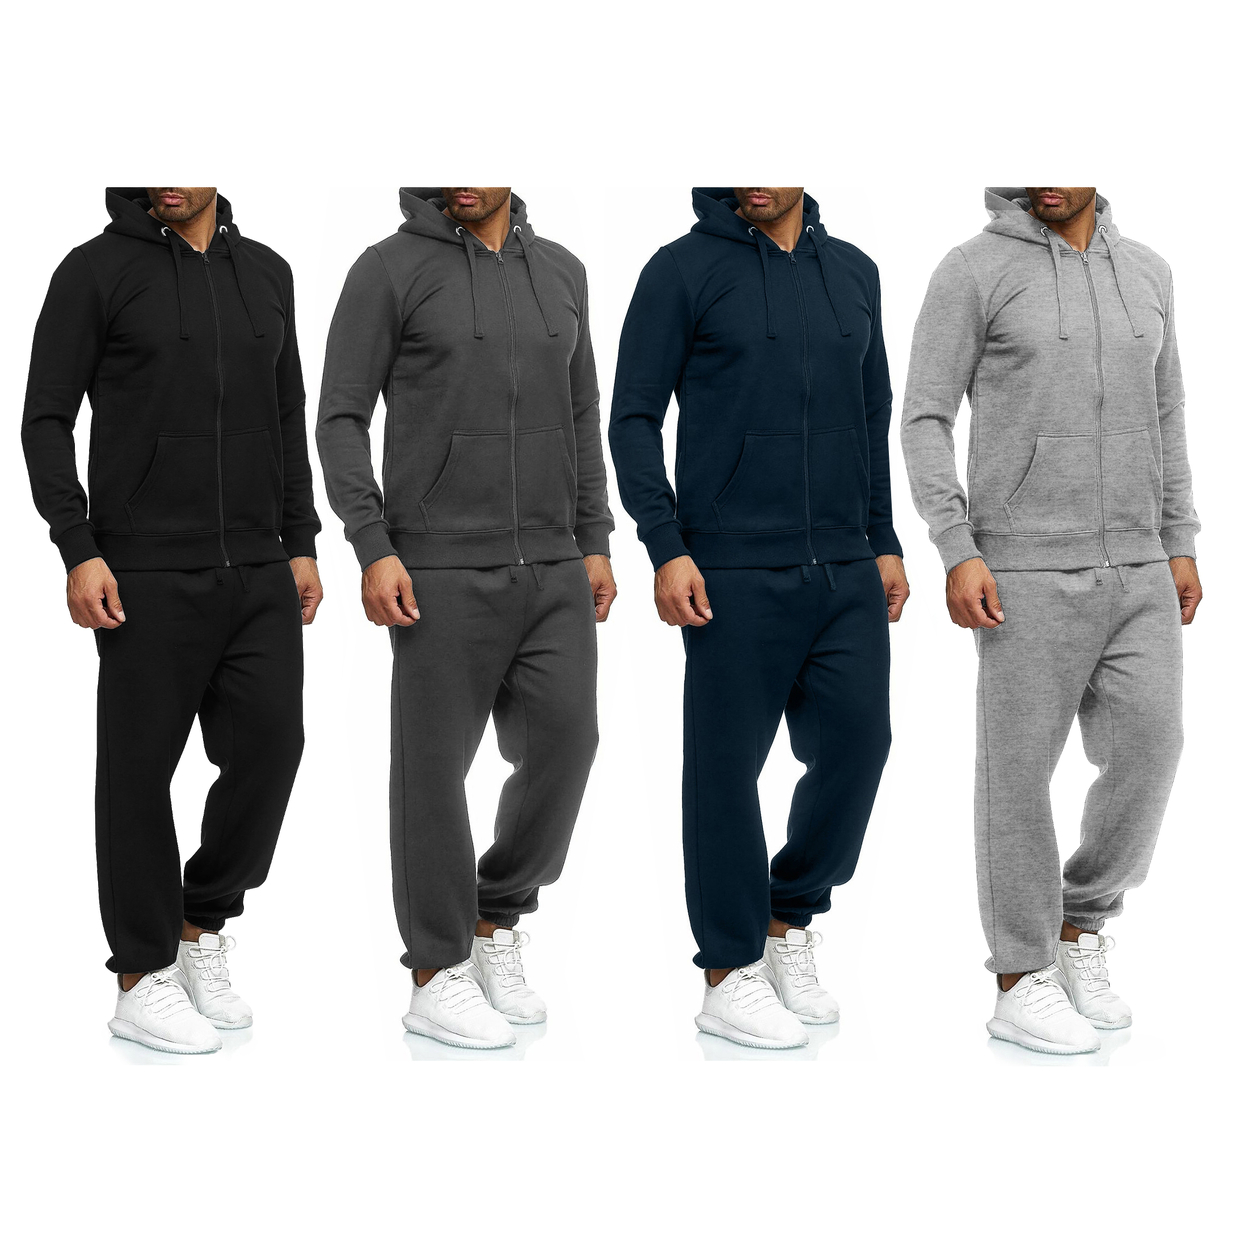 2/4-Piece: Men's Winter Warm Cozy Athletic Multi-Pockets BIG & TALL Sweatsuit Set - Navy, 2, Medium